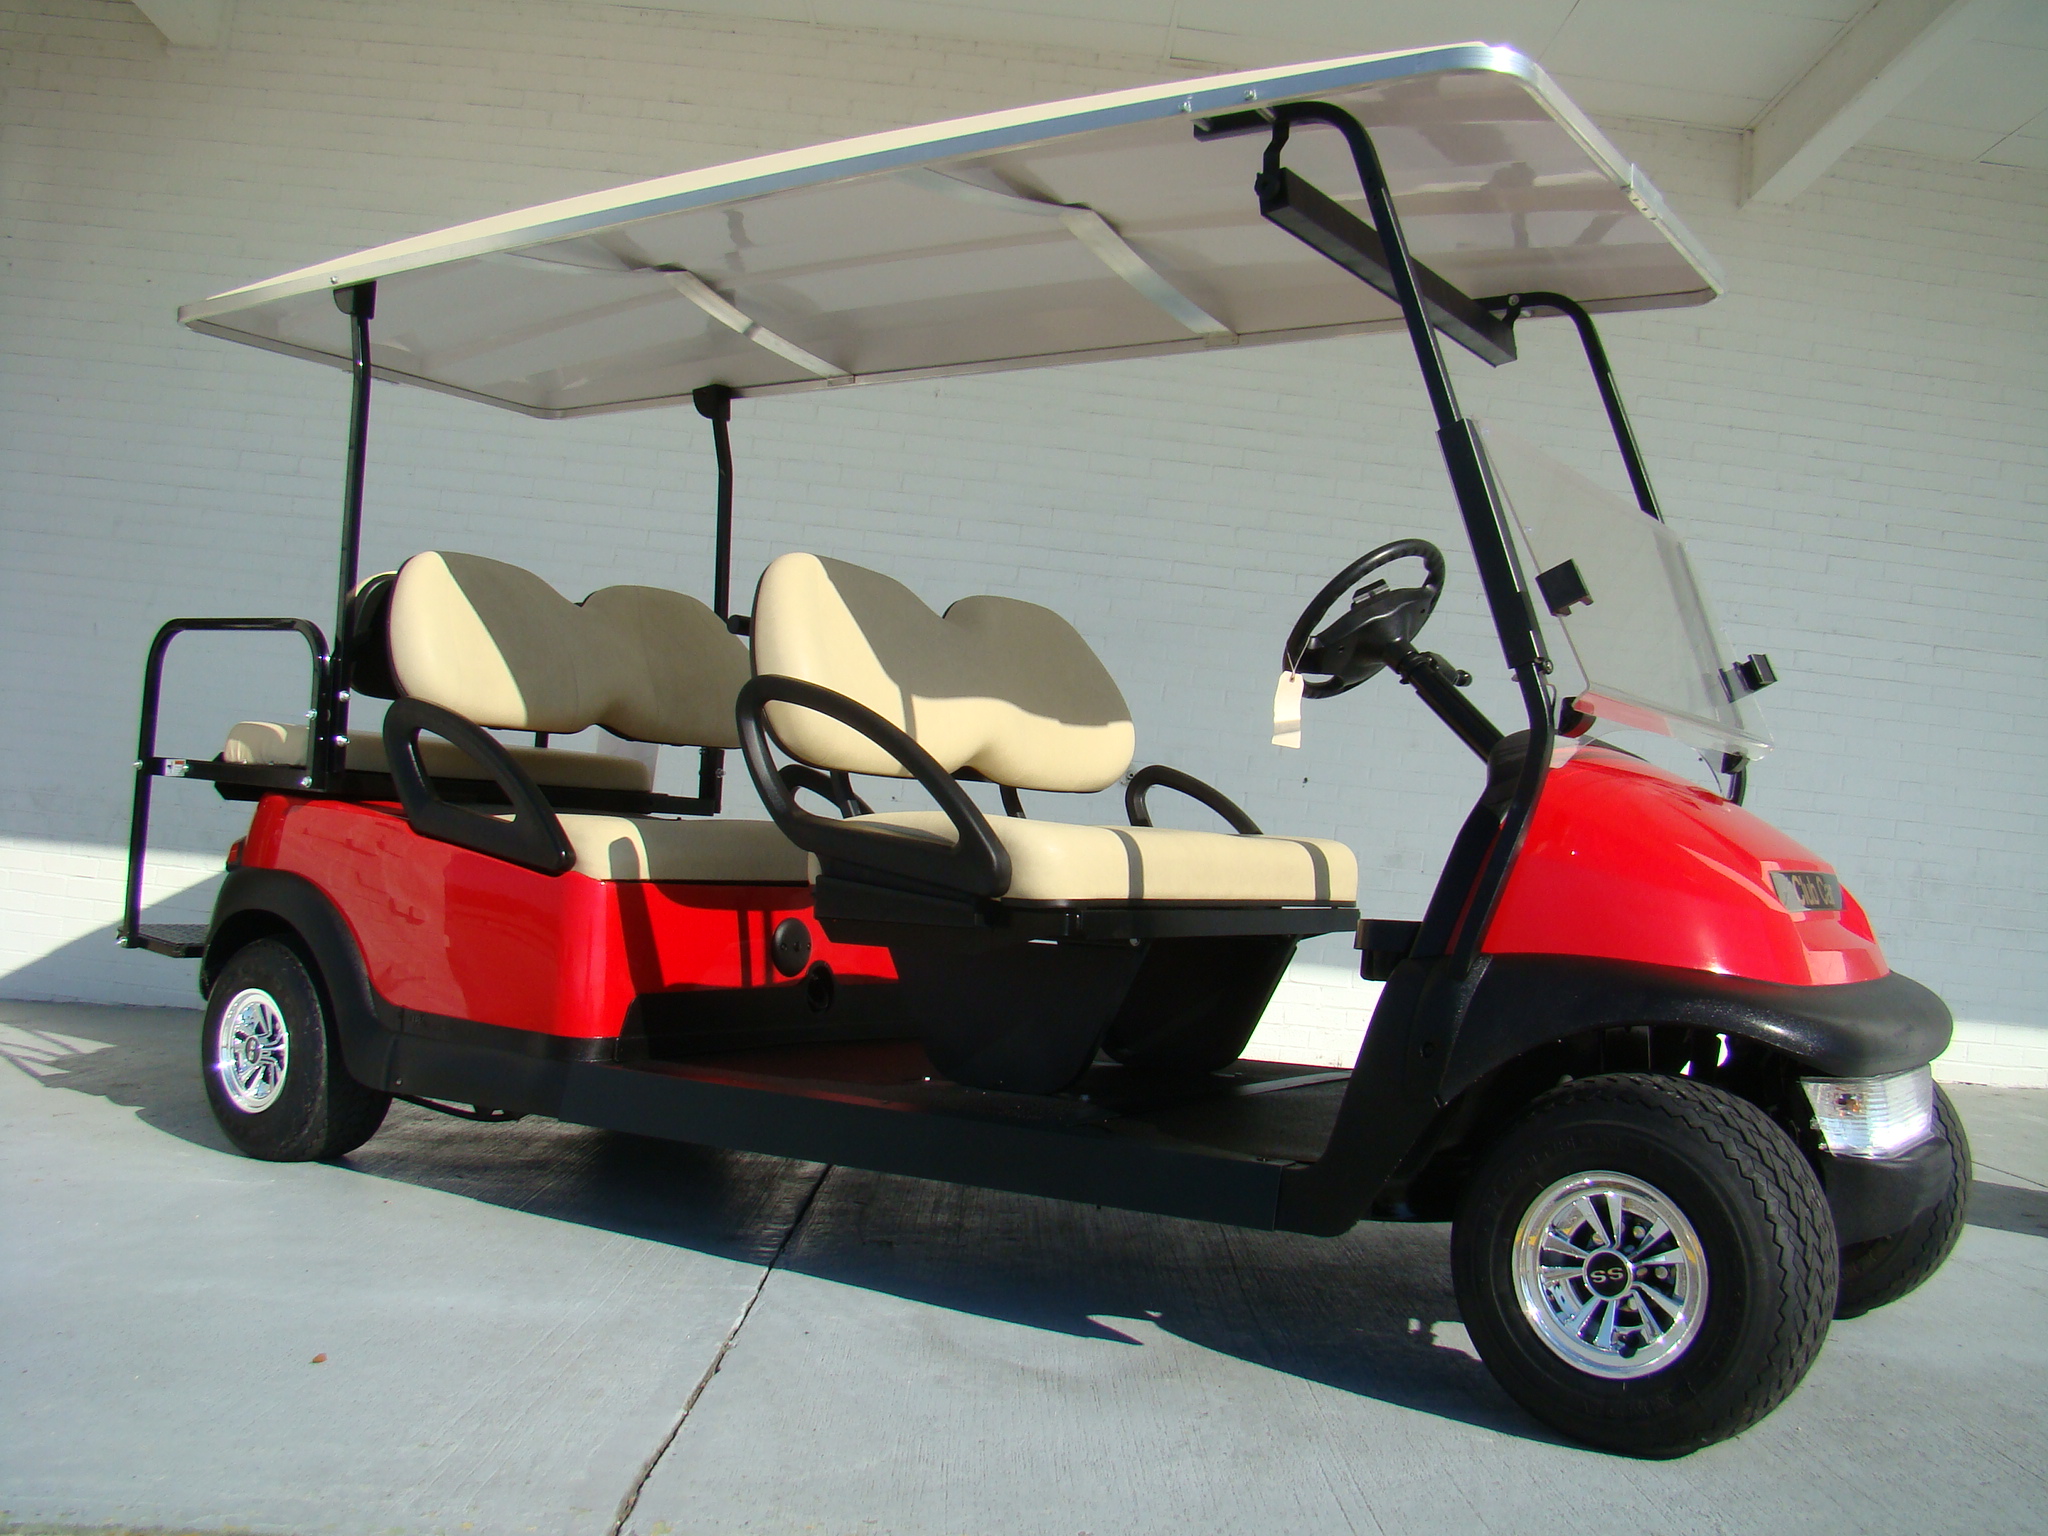 Red 6 Passenger Limo Club Car Golf Cart